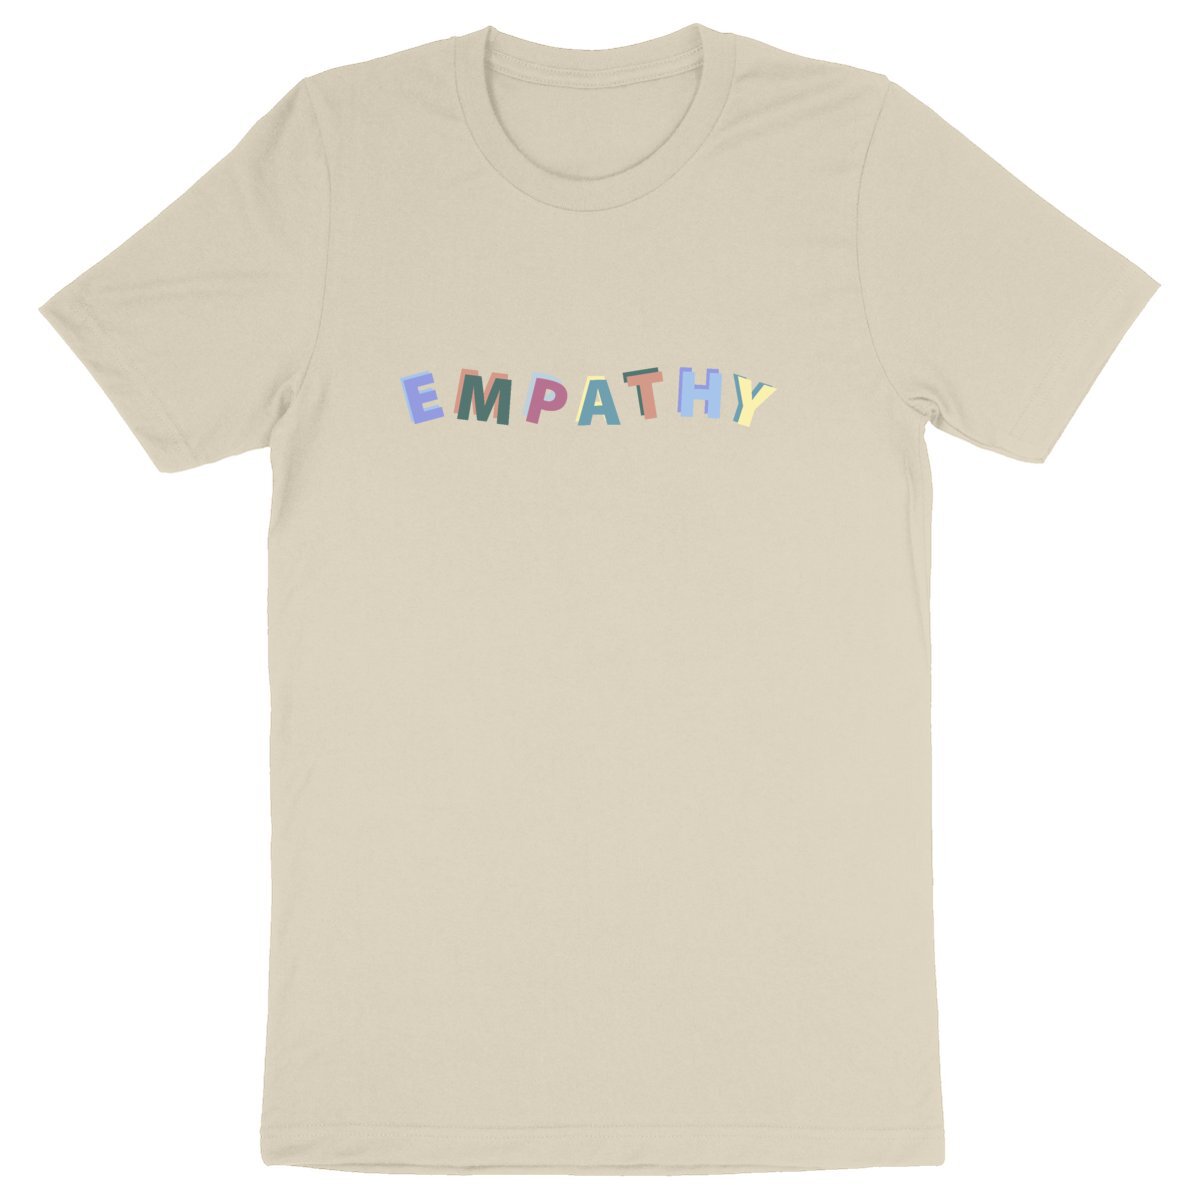 Empathy - Unisex Organic T-shirt